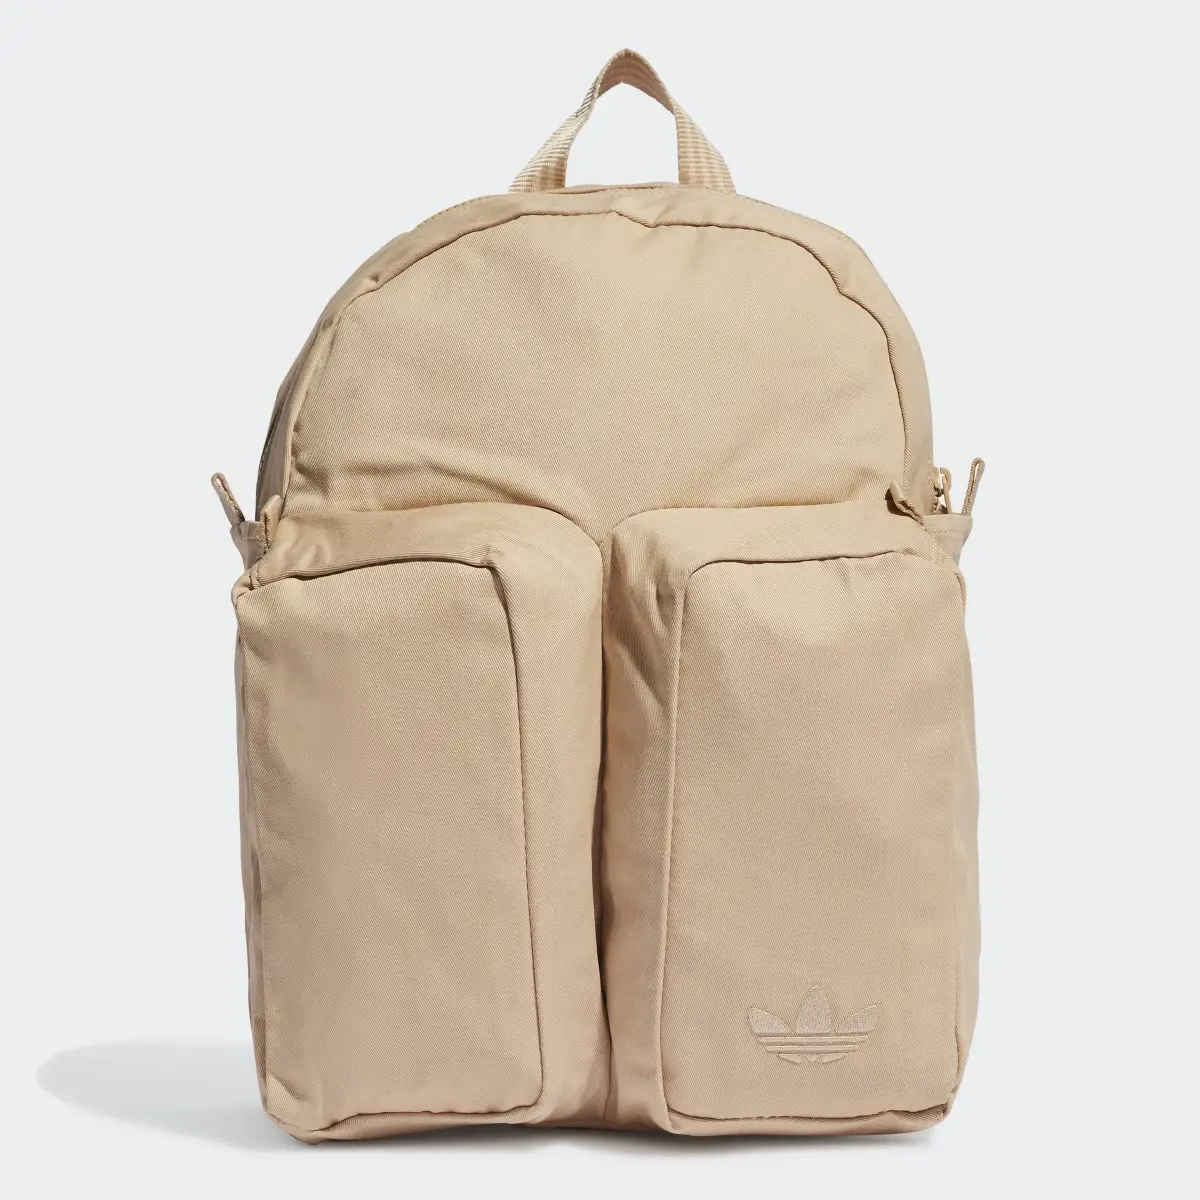 Adidas RIFTA Backpack. 2